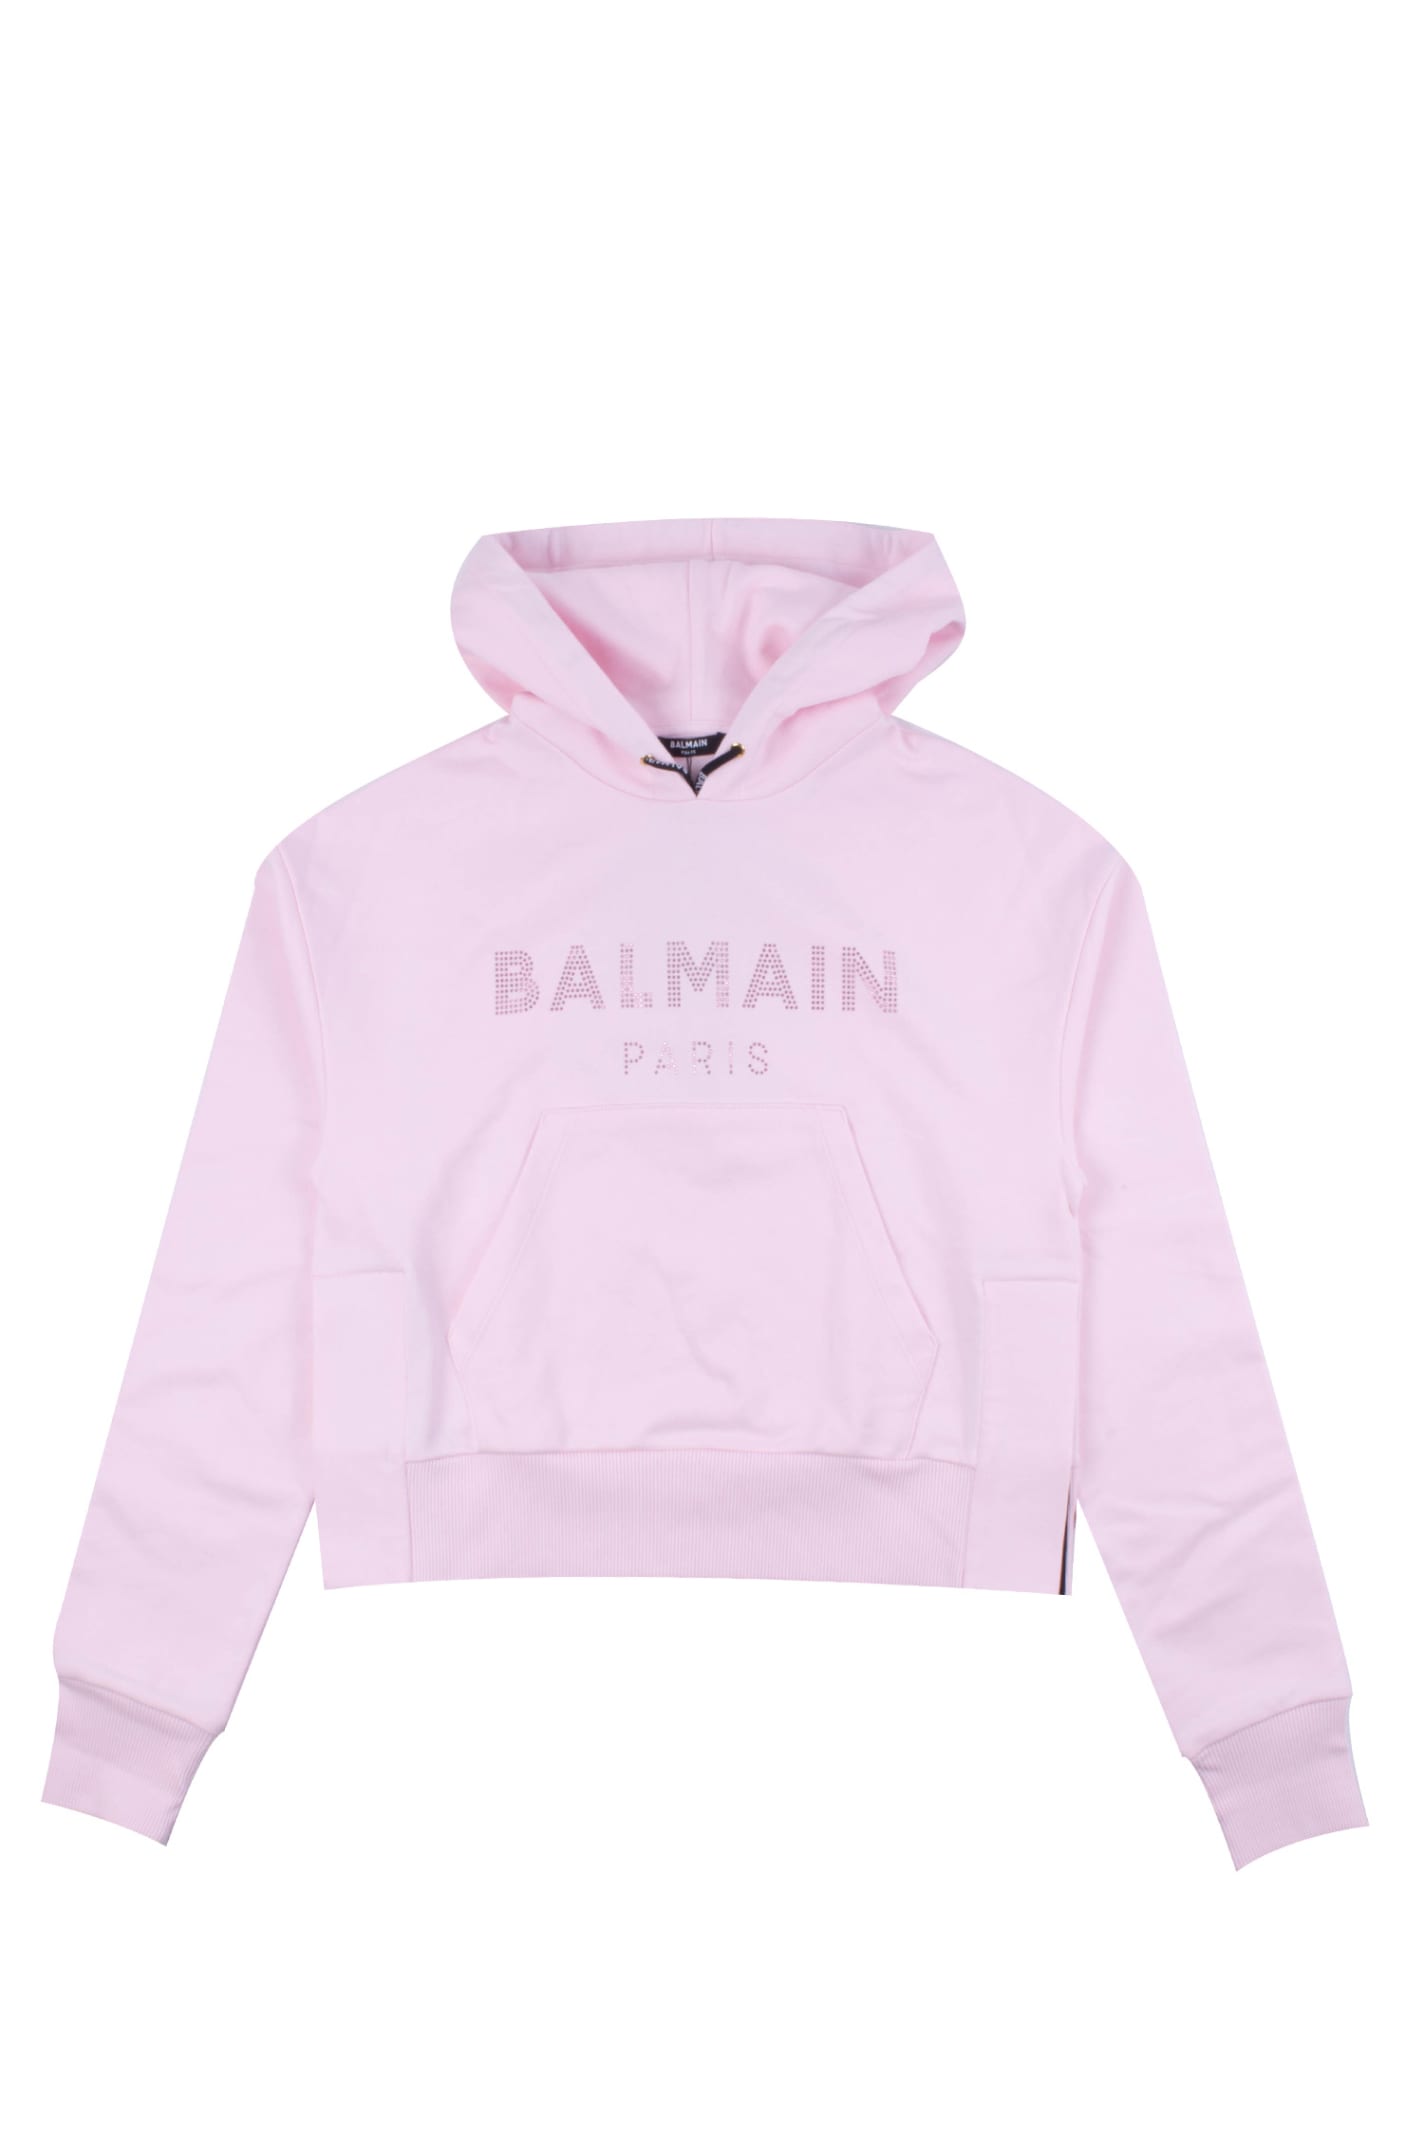 Cropped Pale Pink Cotton Sweatshirt With Rhinestone Balmain Logo